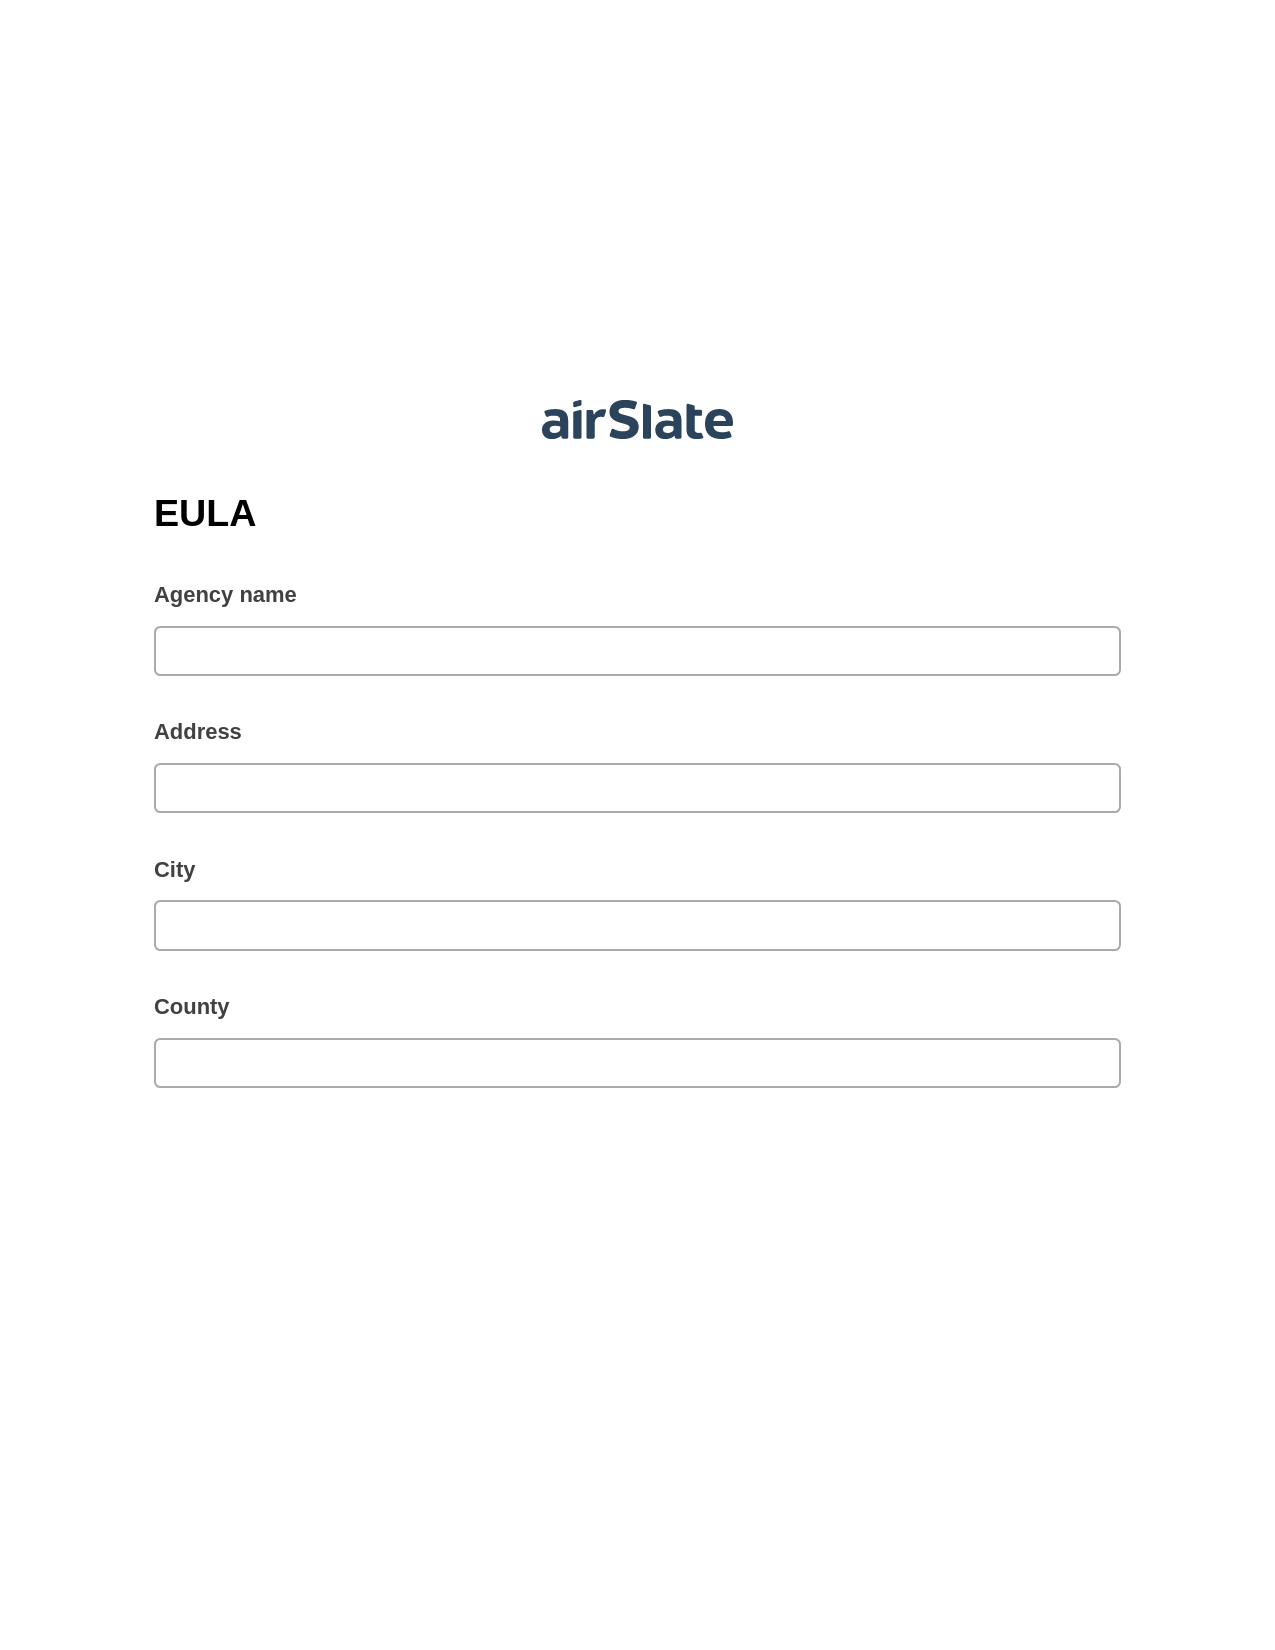 Multirole EULA Pre-fill from Salesforce Record Bot, Mailchimp send Campaign bot, Box Bot